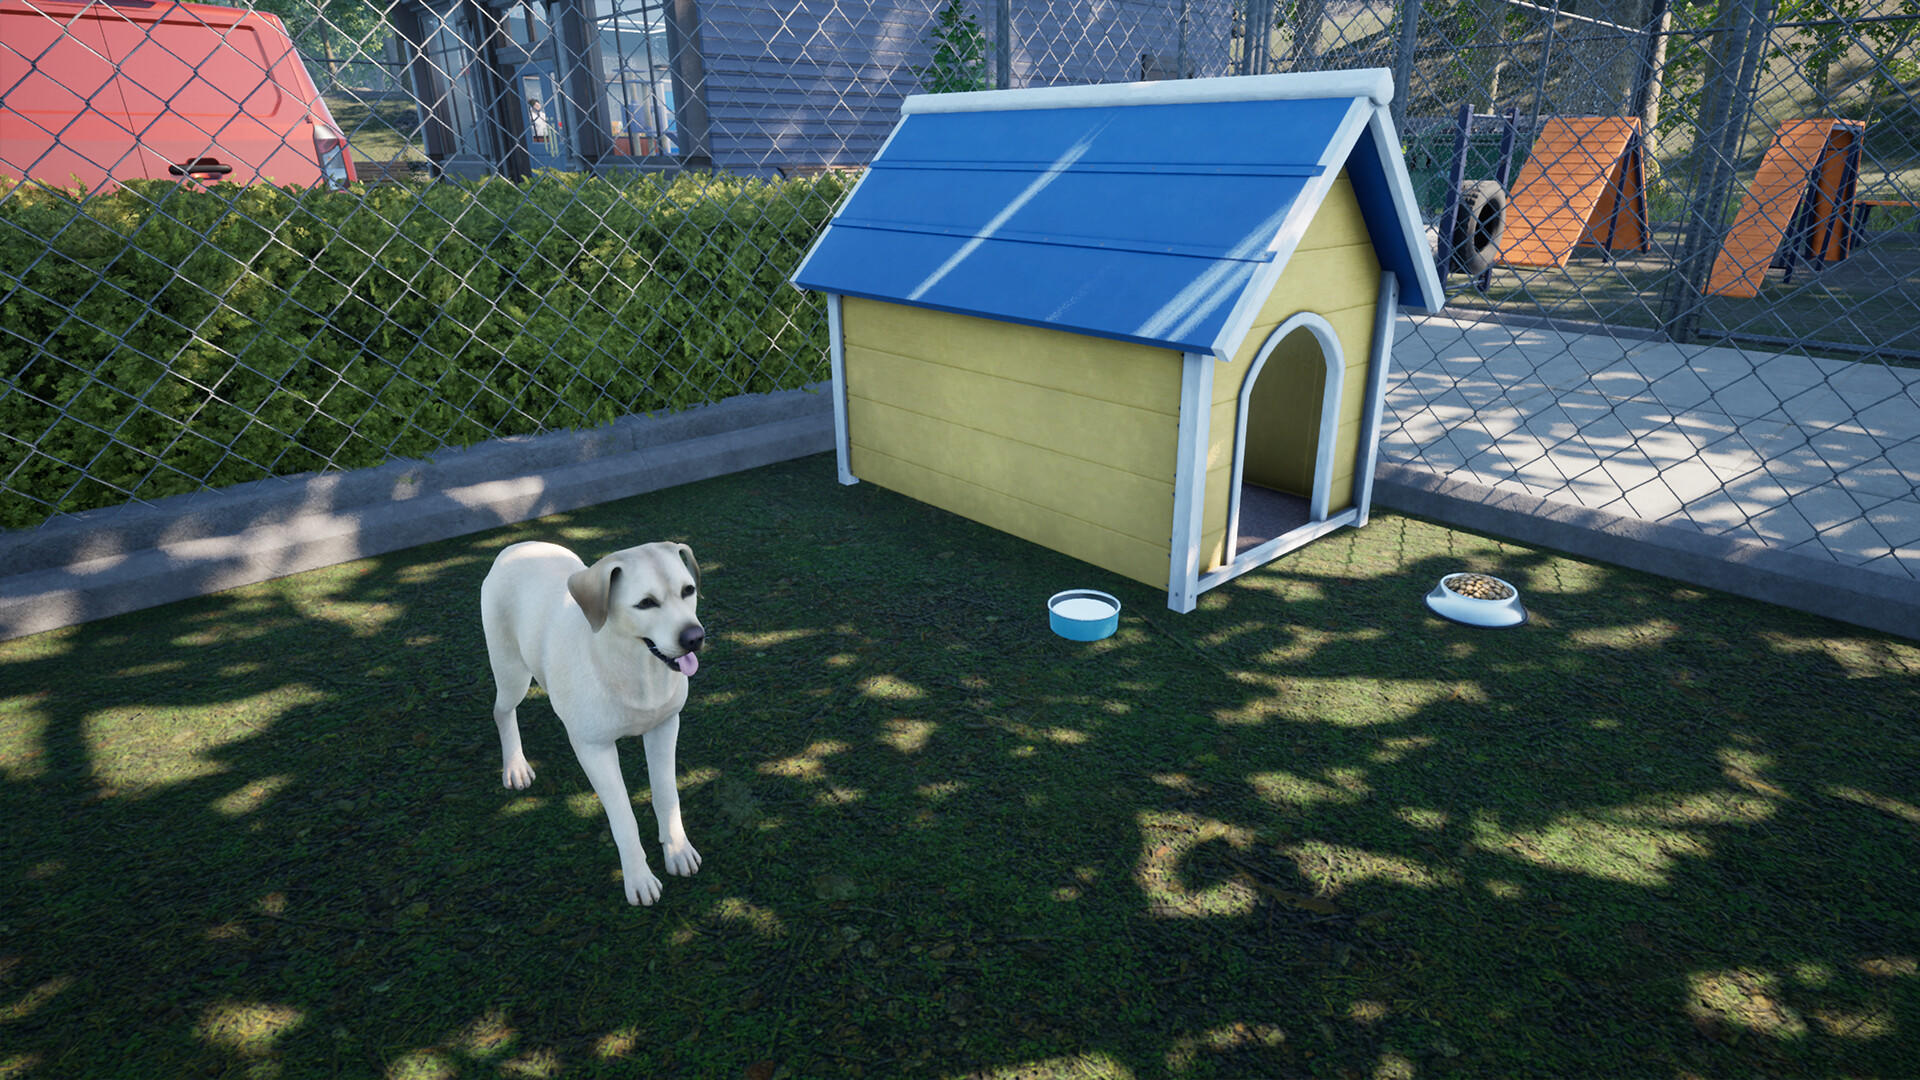 Pet Shop Simulator 2 ภาพหน้าจอเกม